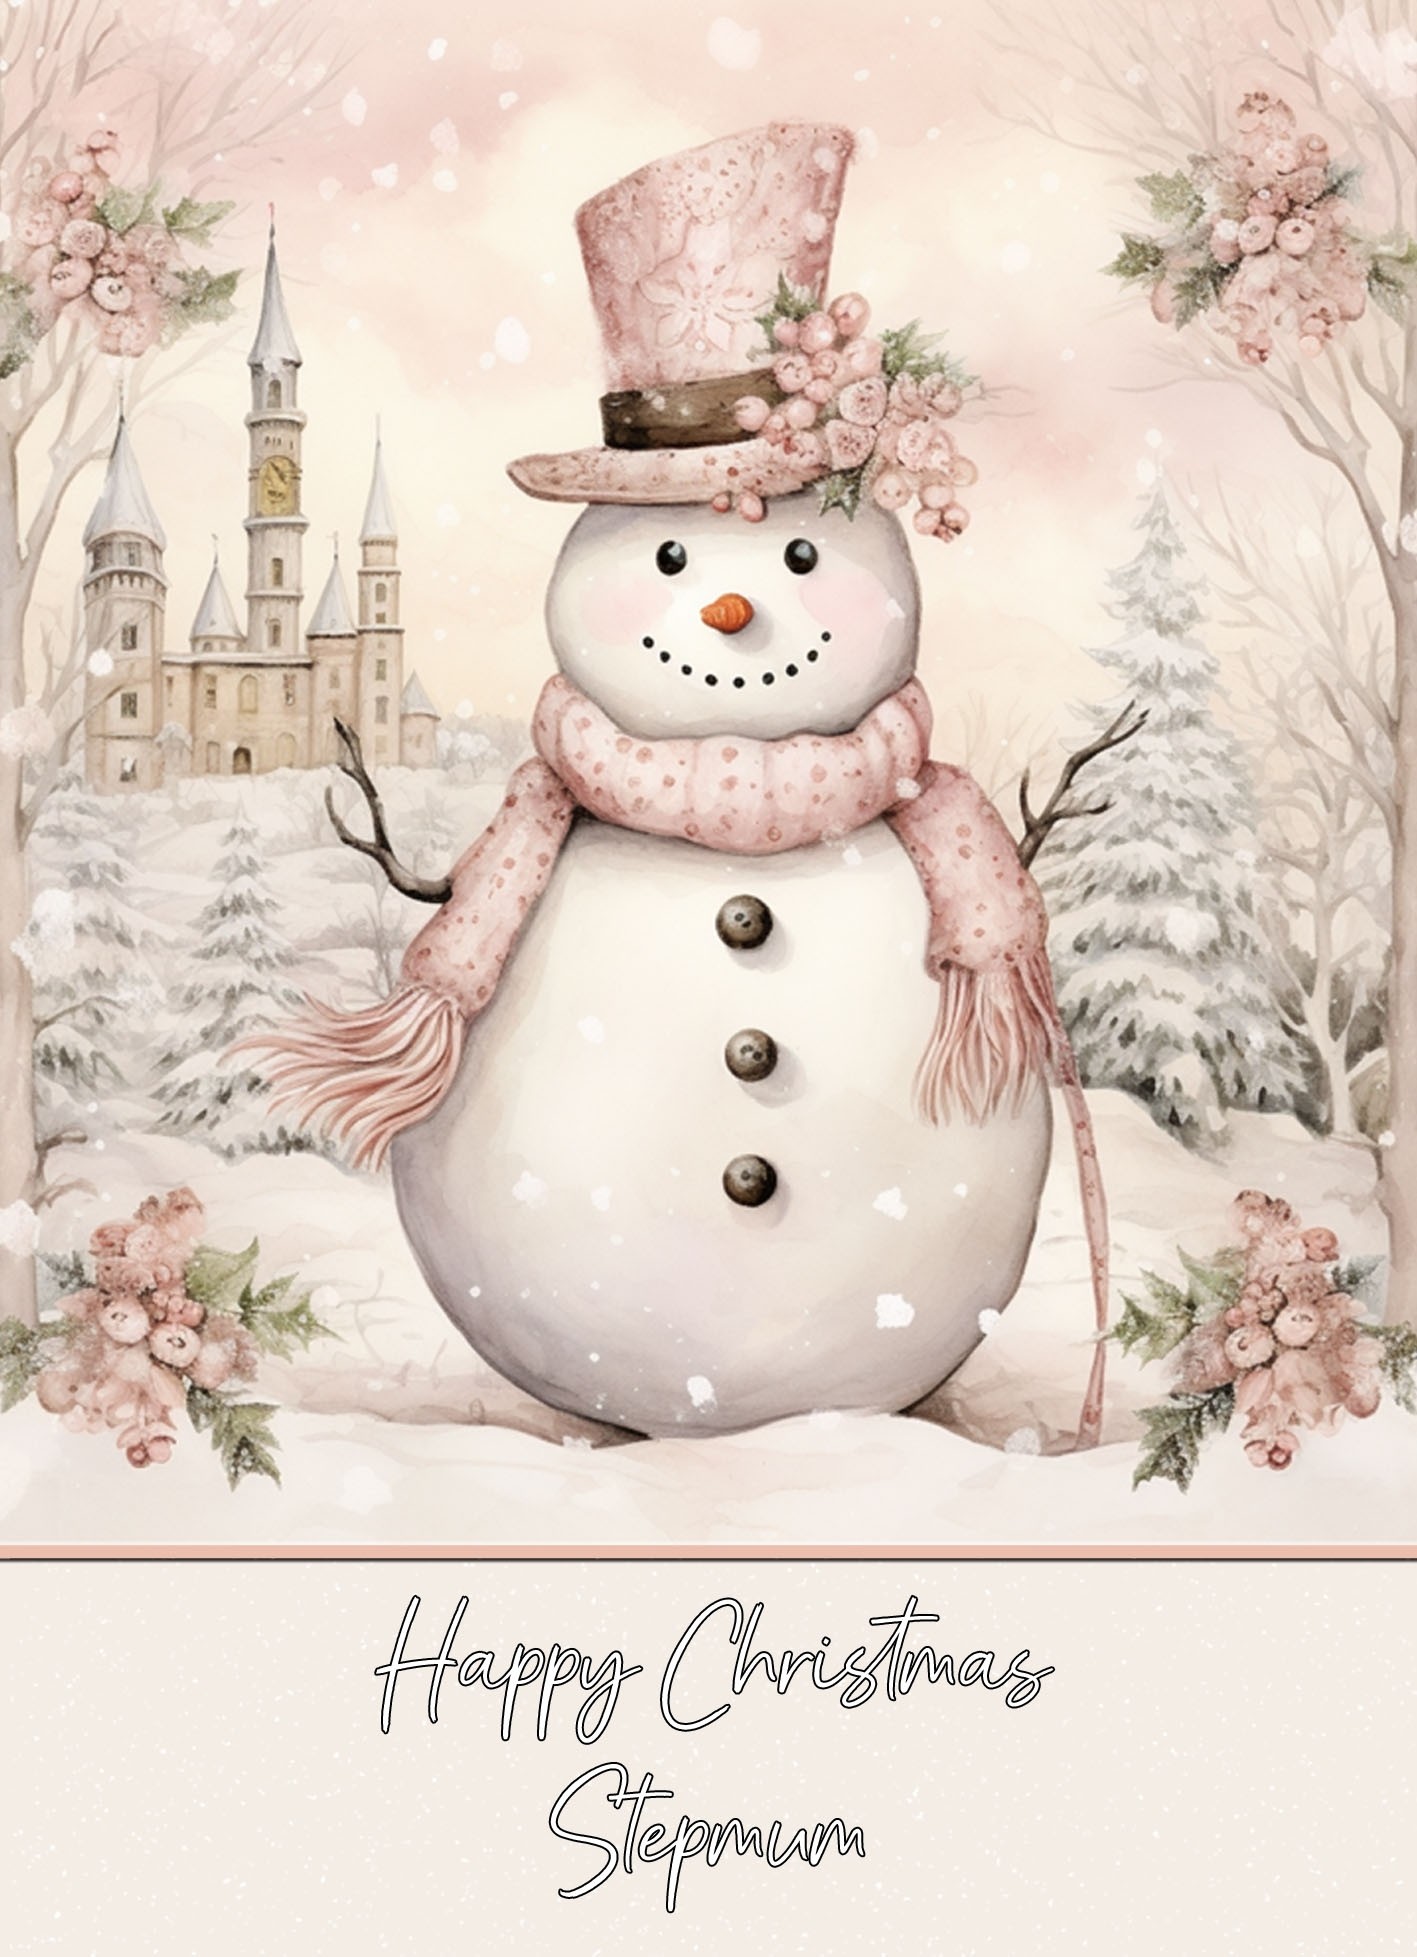 Snowman Art Christmas Card For Stepmum (Design 2)